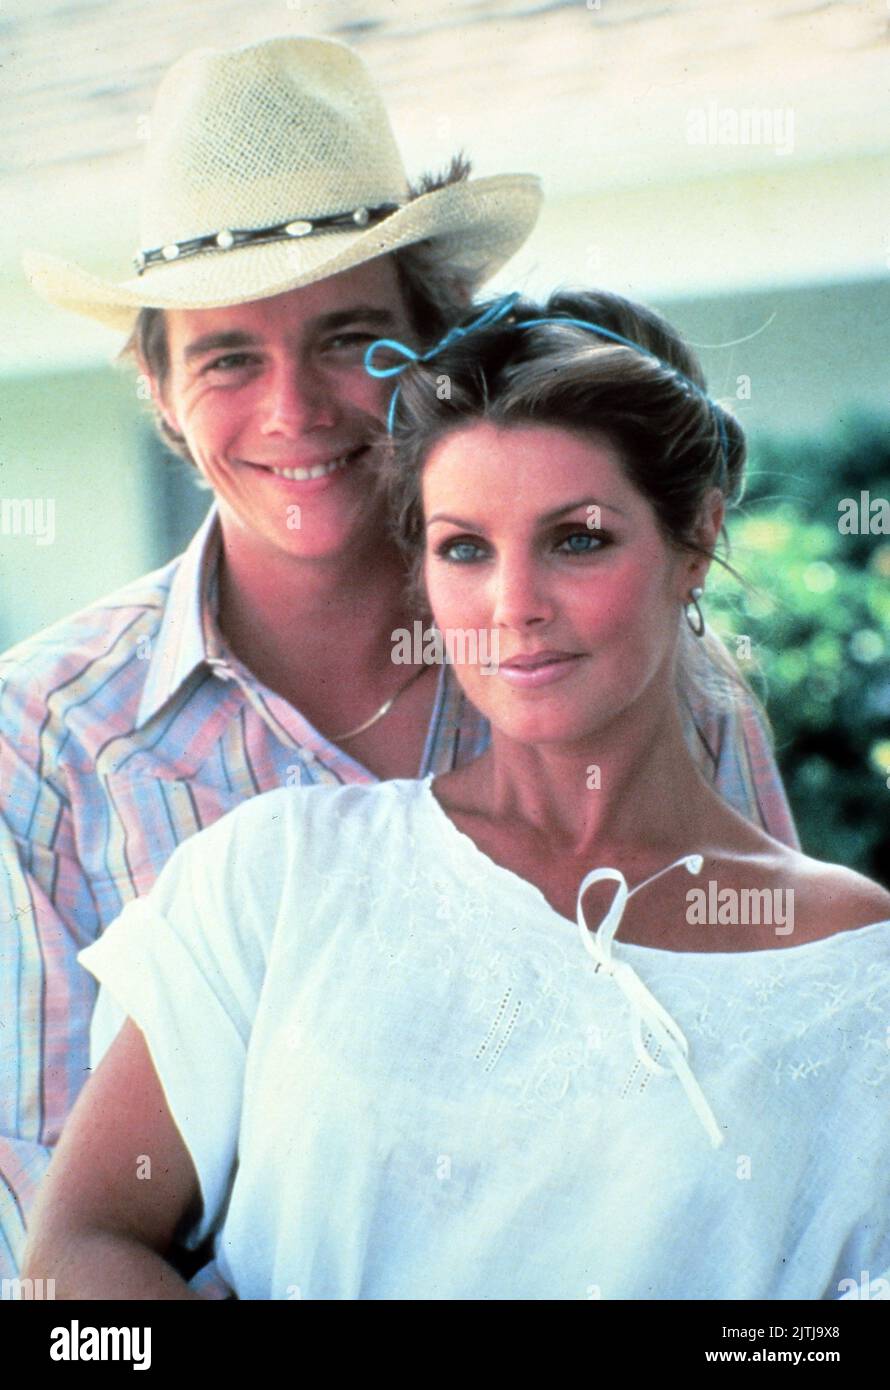 Dallas, Fernsehserie, USA 1978 - 1991, Darsteller: Priscilla Beaulieu Presley Stock Photo